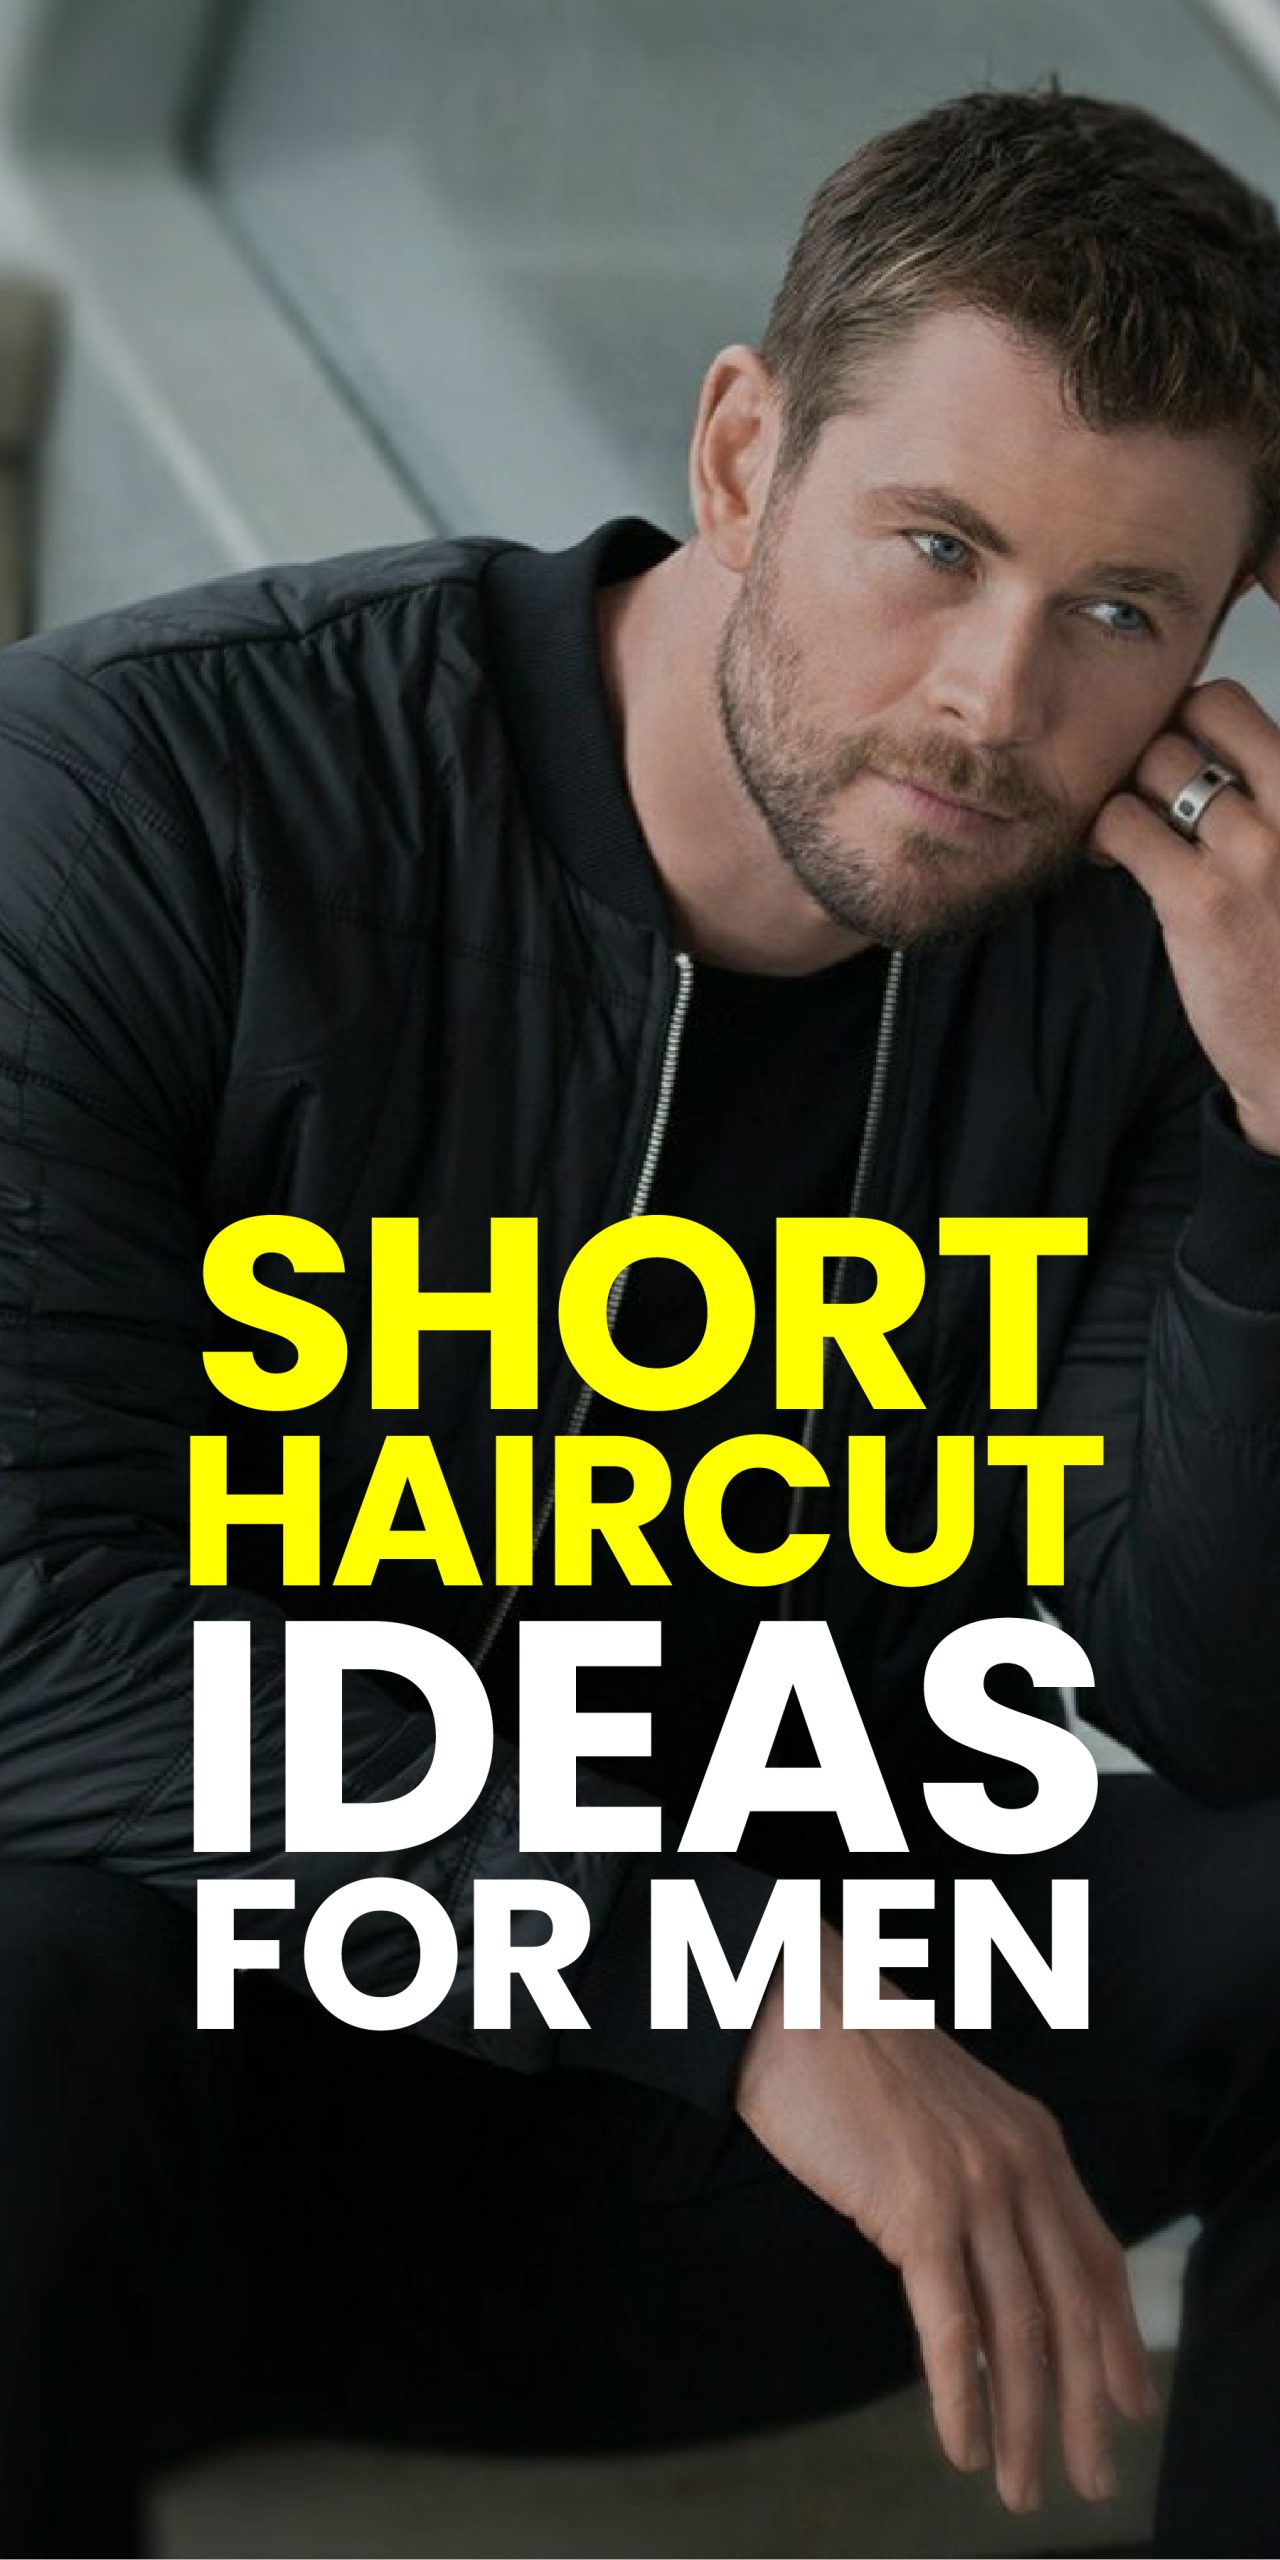 SHORT HAIRCUT IDEAS FOR MEN